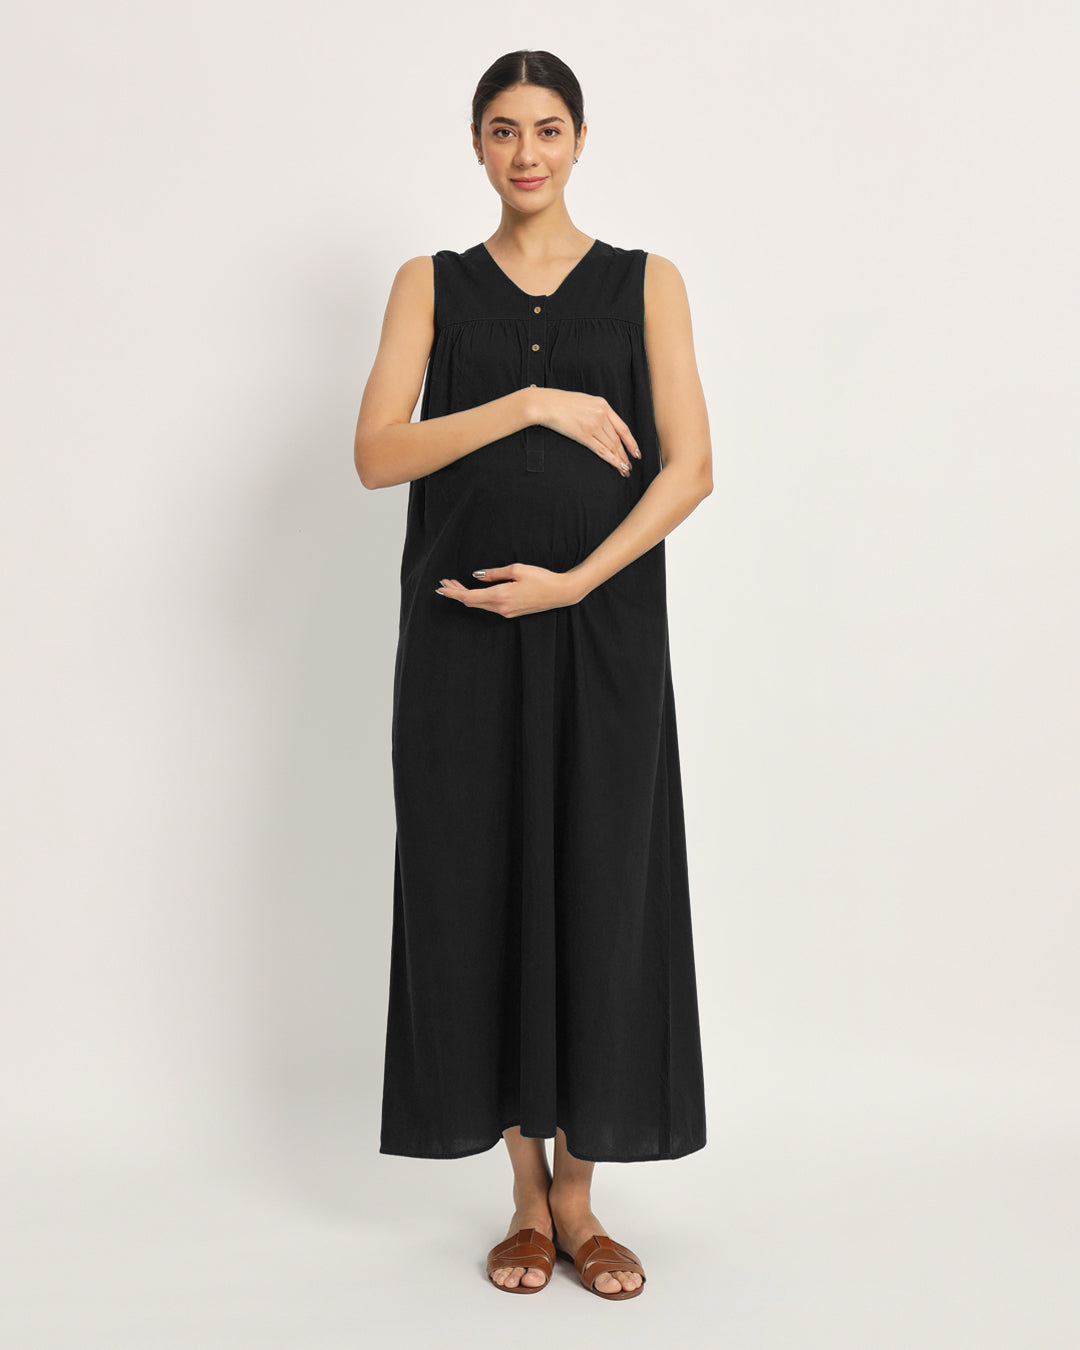 Classic Black Mommylicious Maternity & Nursing Dress